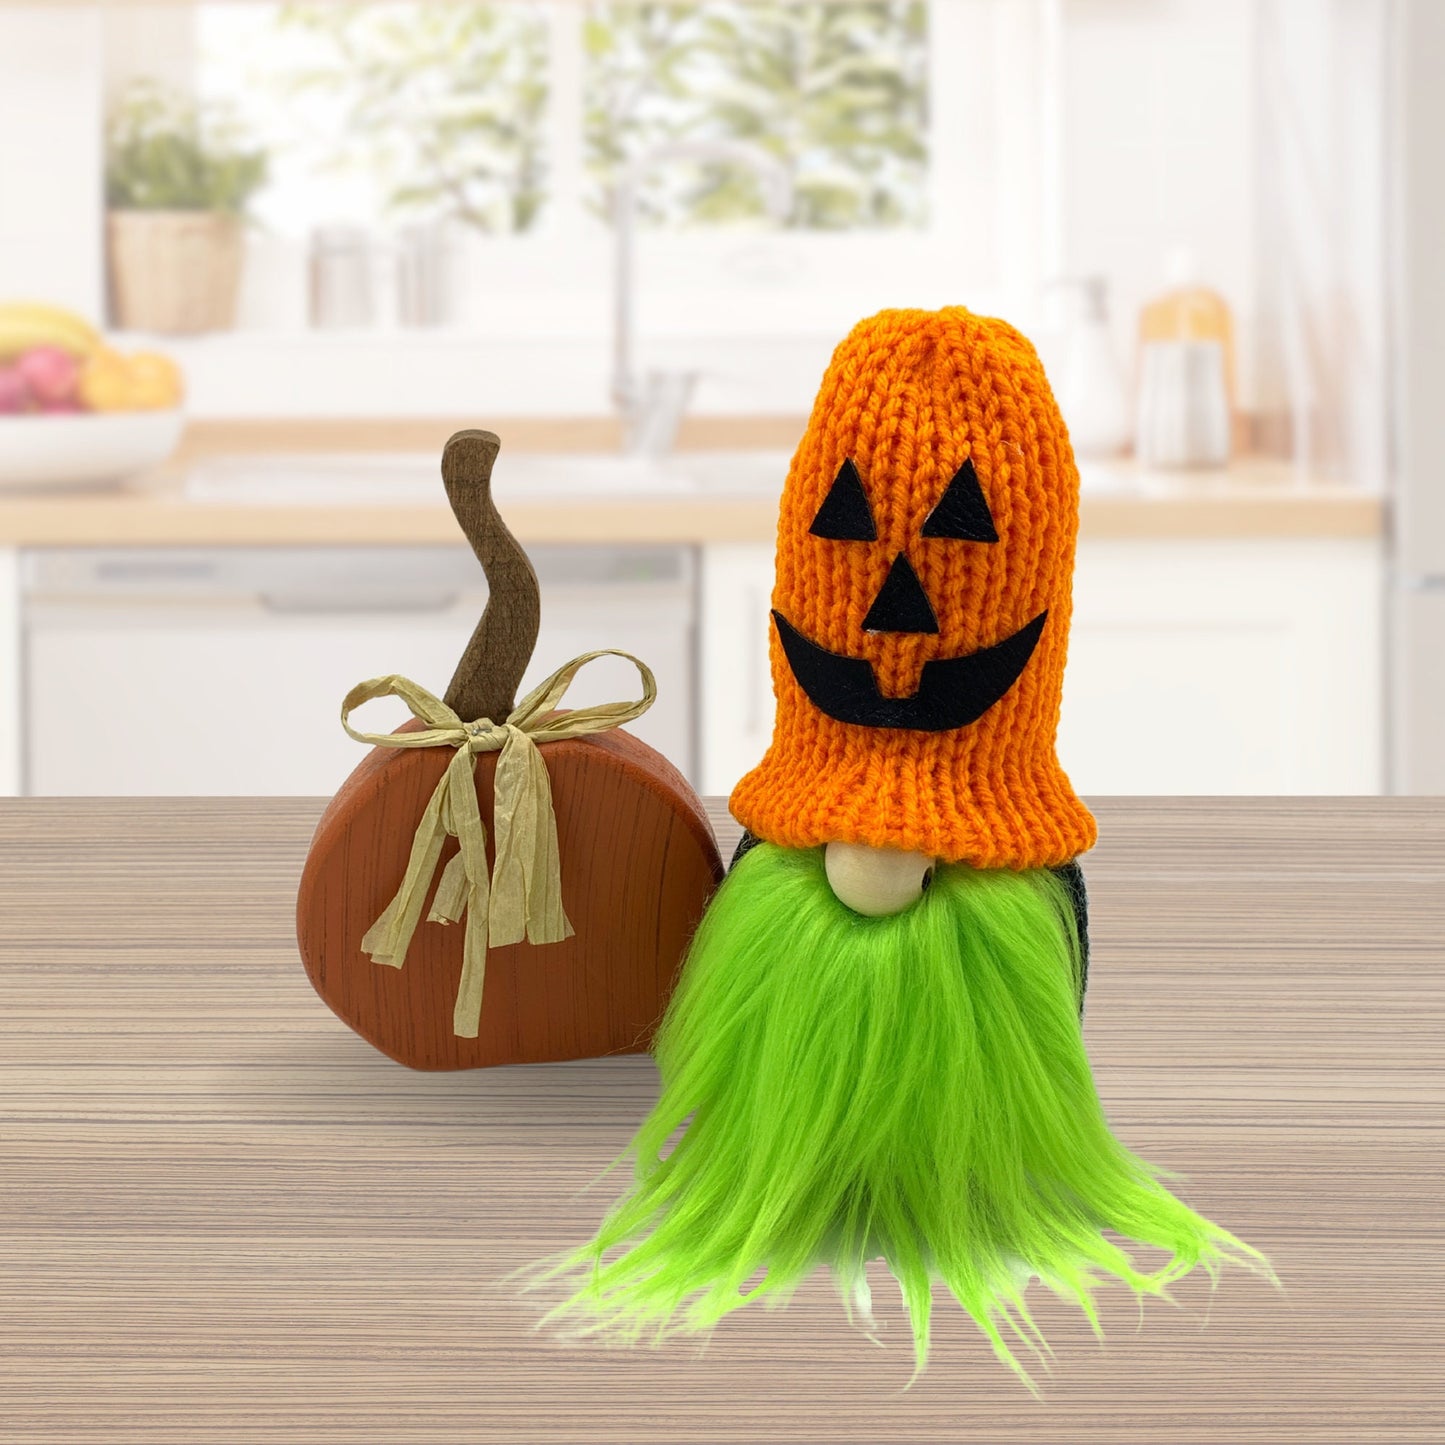 Halloween Gnome / Pumpkin Tiered Tray Decor / Rustic Gnome / Jack O' Lantern Gnome